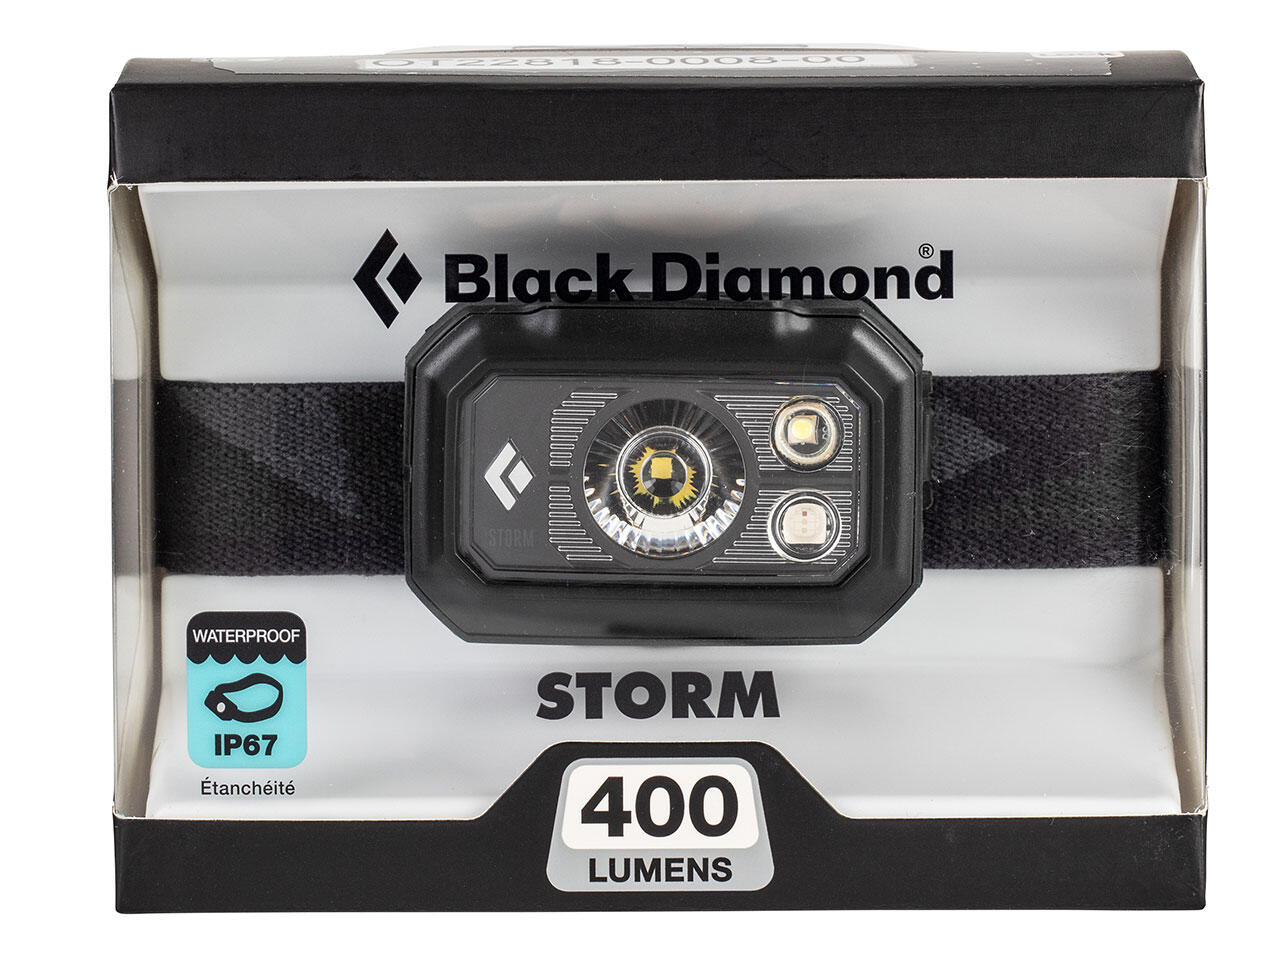 Storm 400 Black Diamond